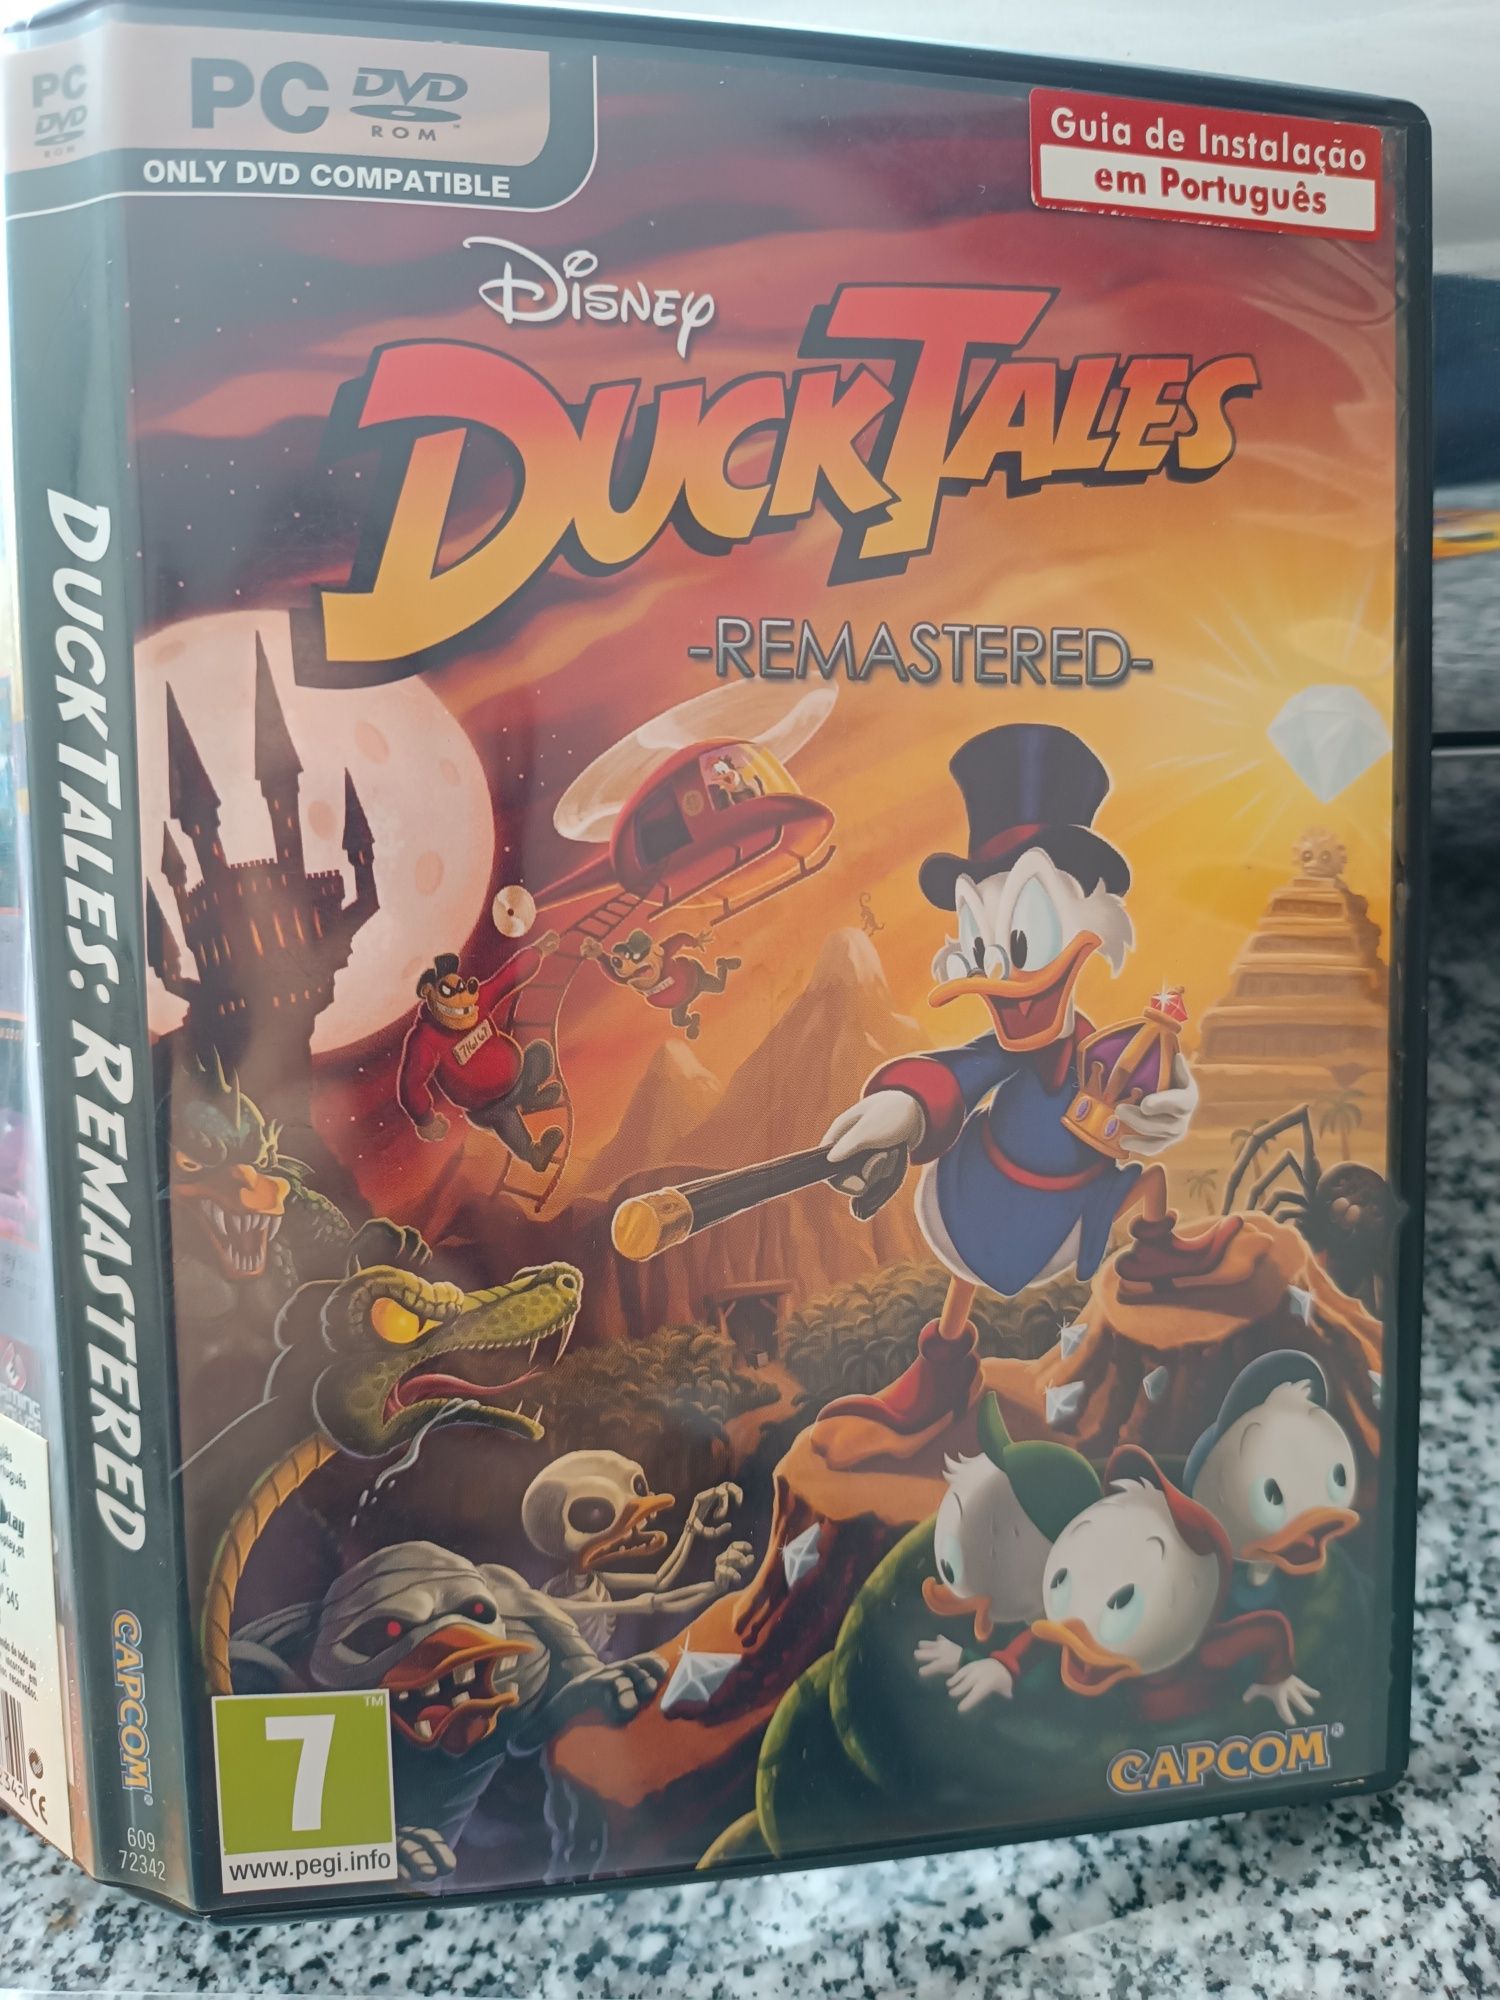 DuckTales Remastered PC DVD-Rom Capcom